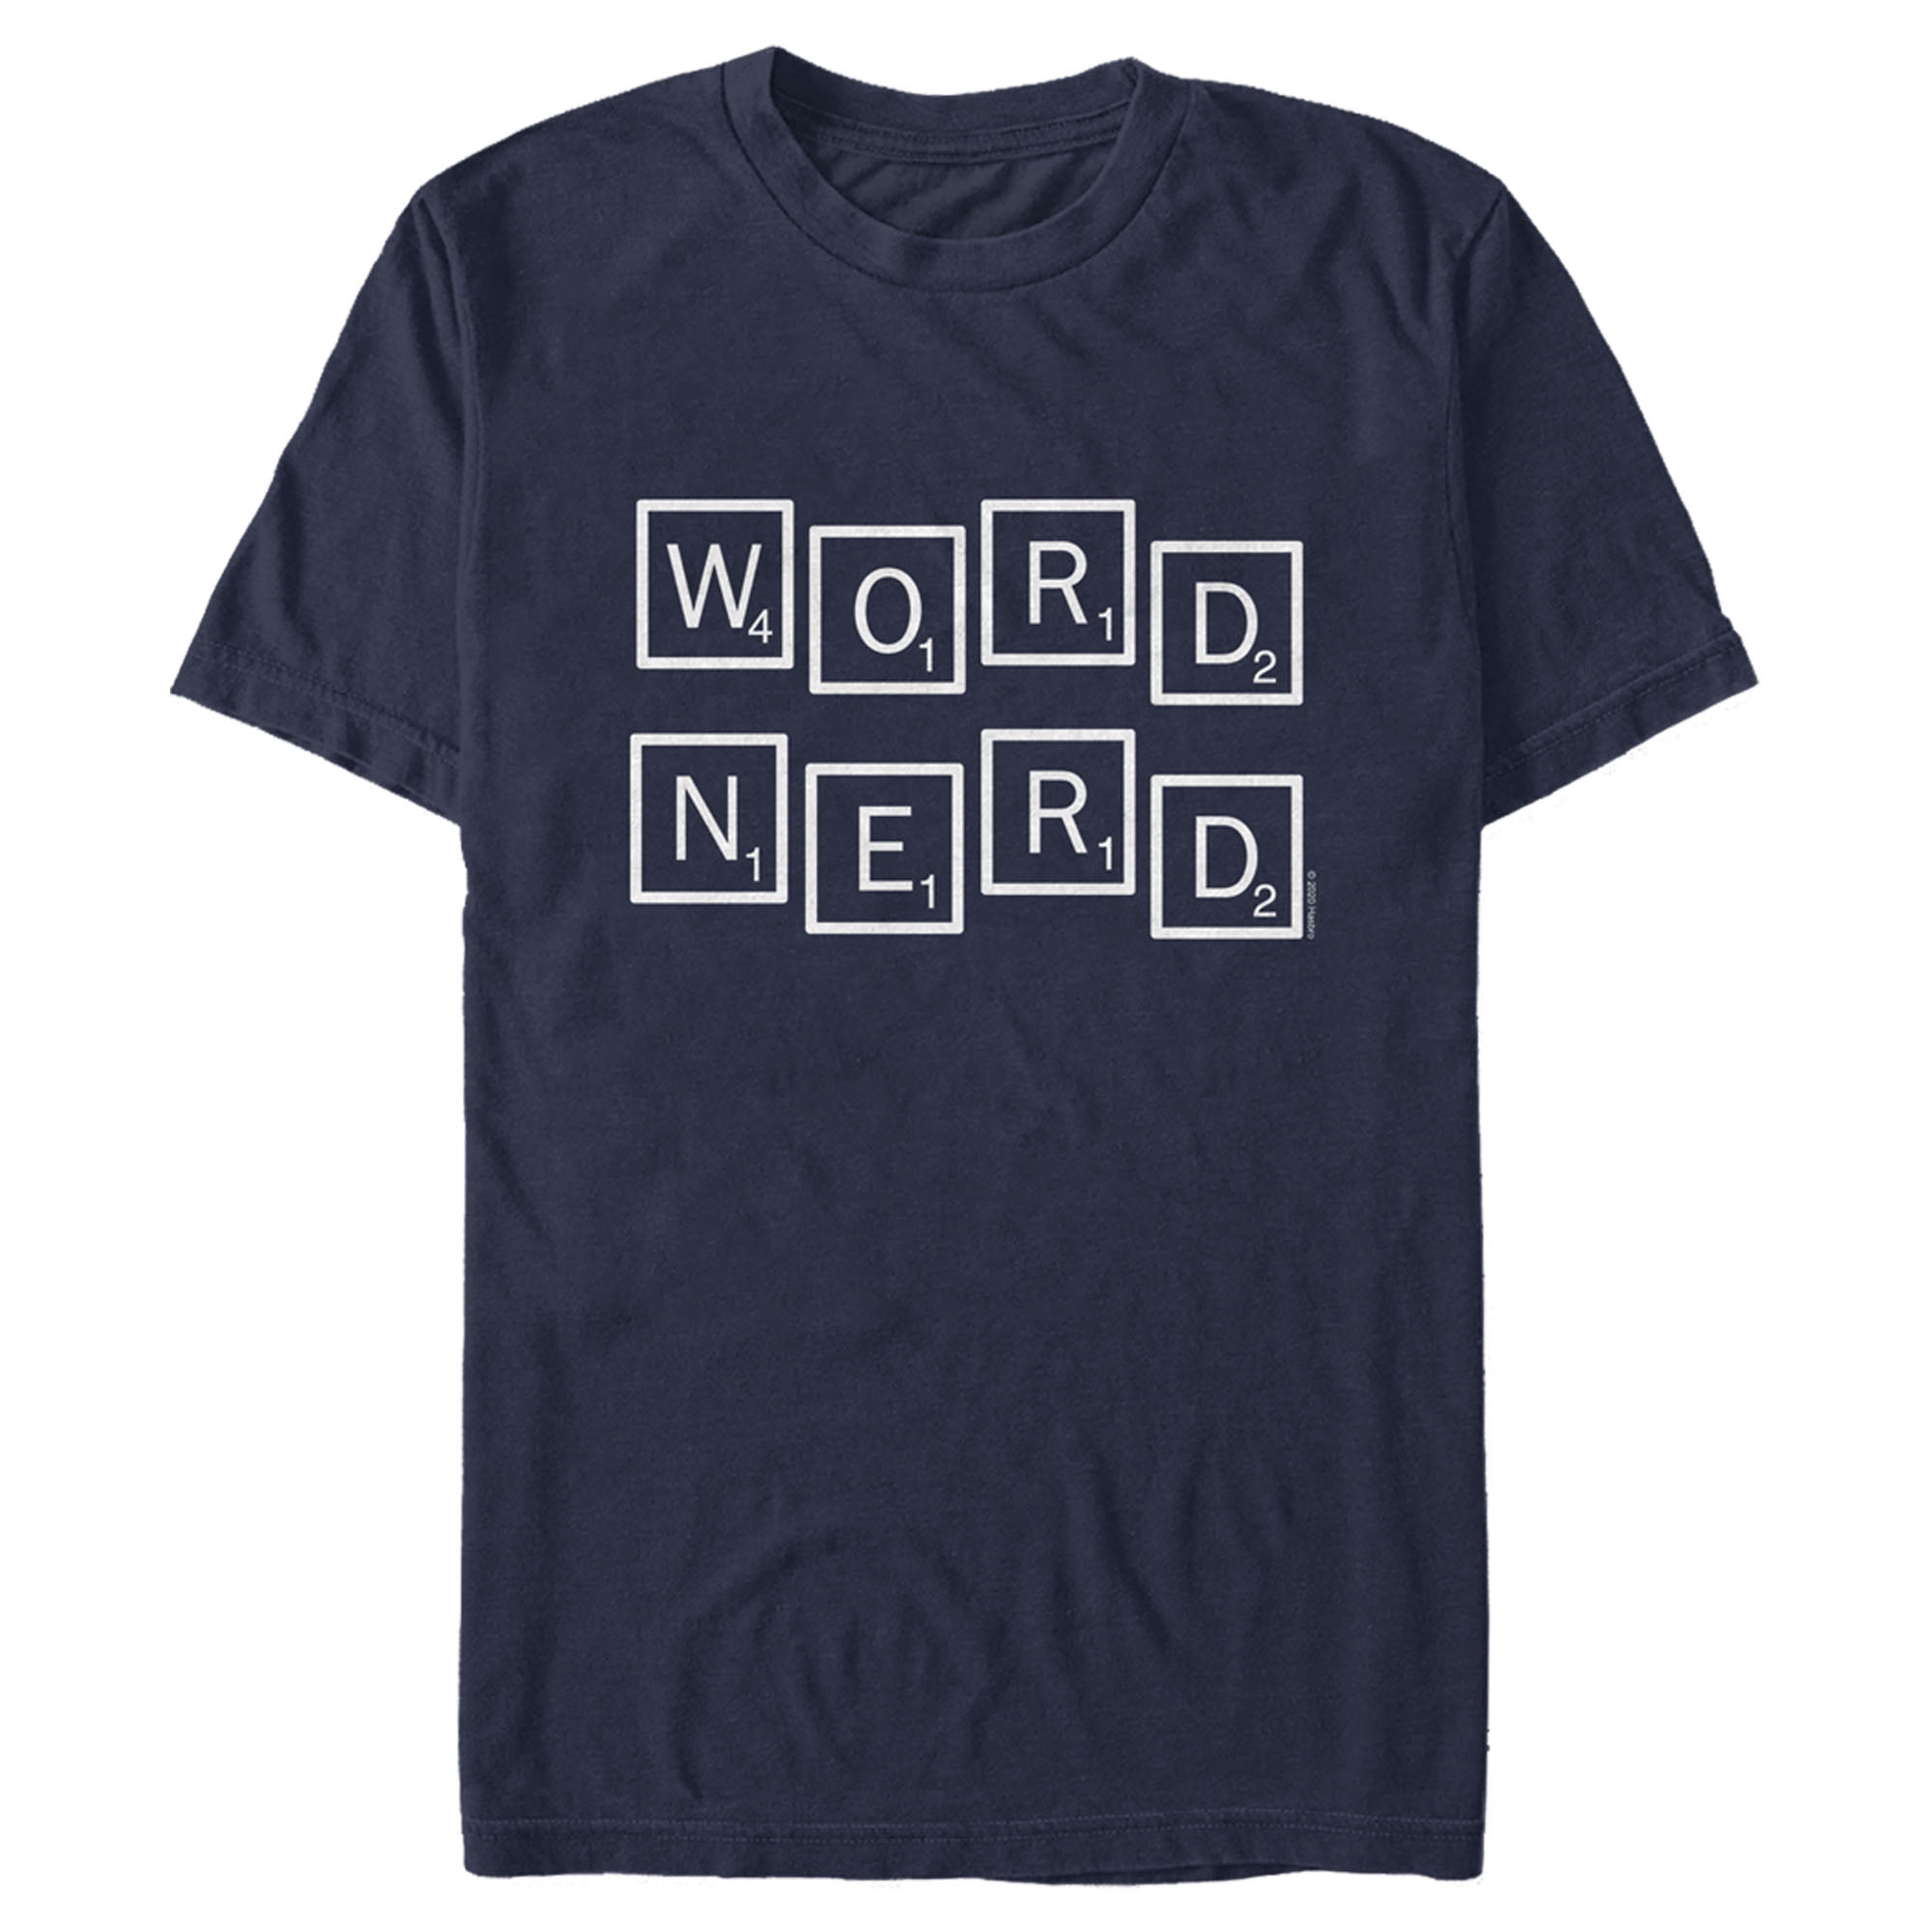  Custom Funny Graphic T Shirts for Men M Scrabble